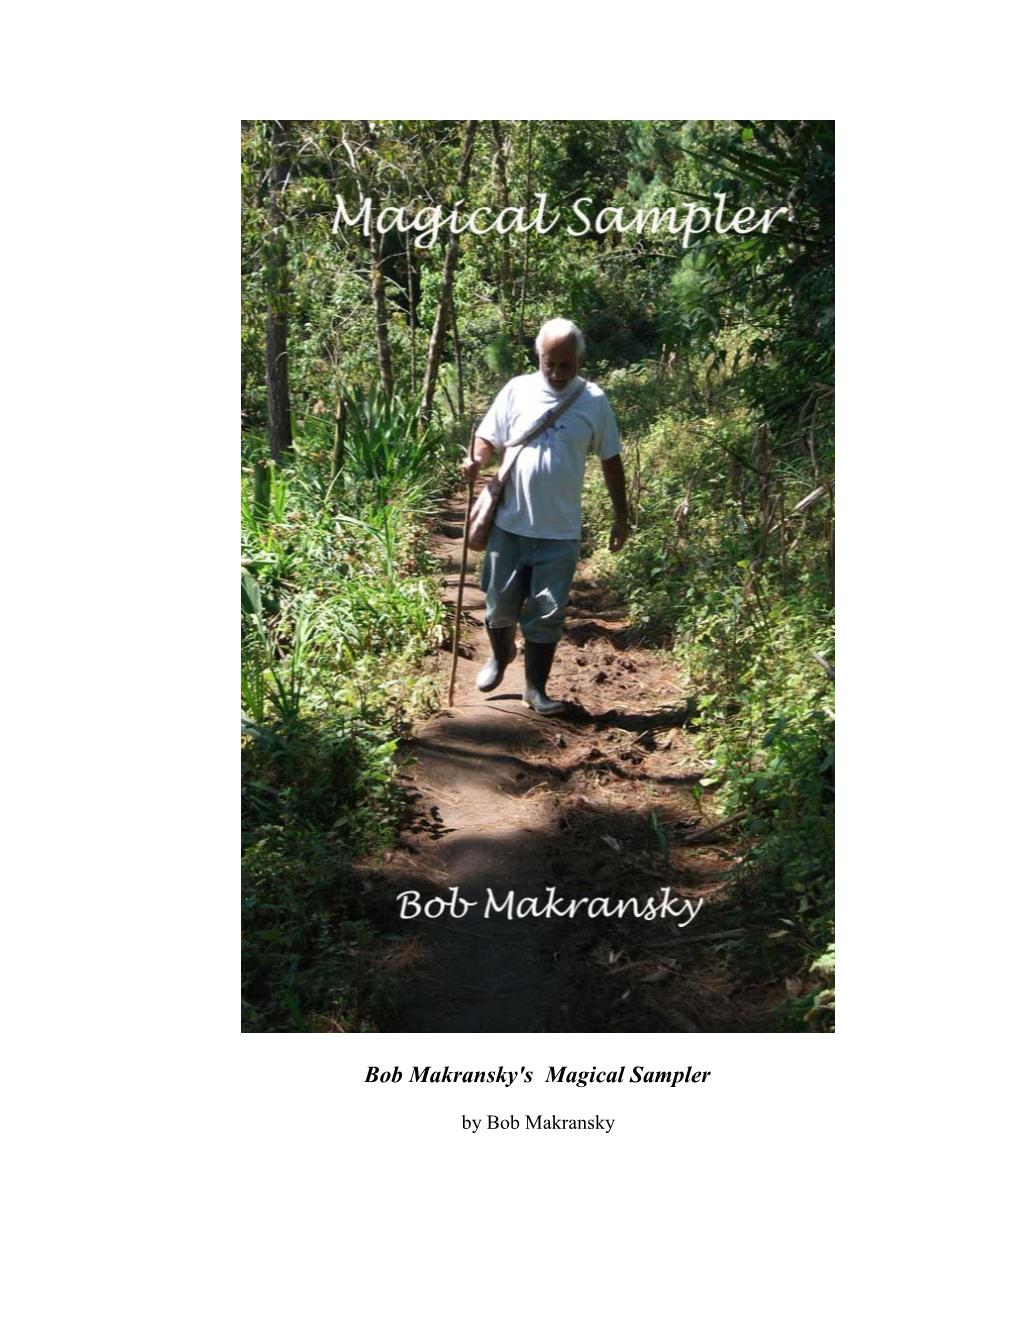 A Bob Makransky Magical Sampler